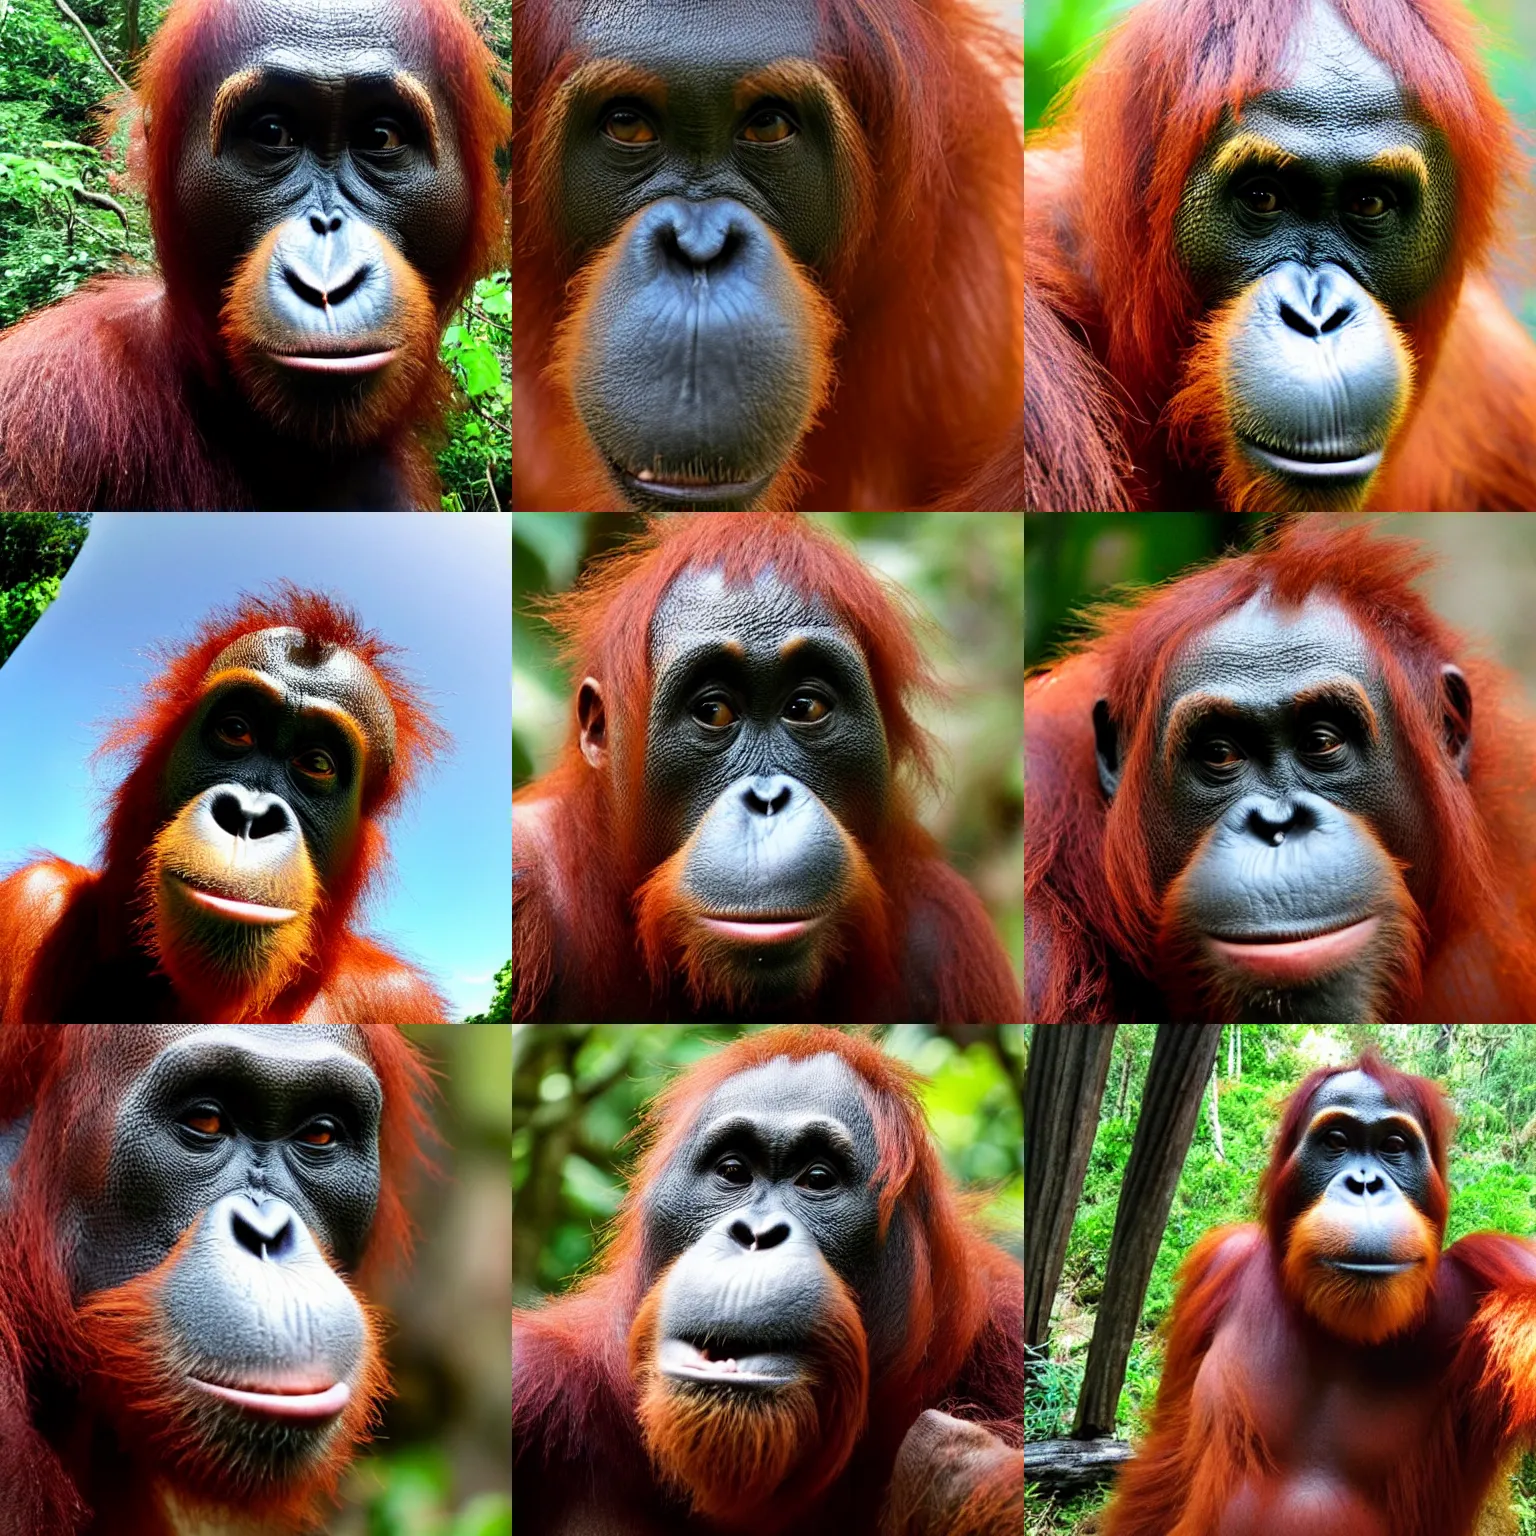 Prompt: a bad selfie of an orangutan